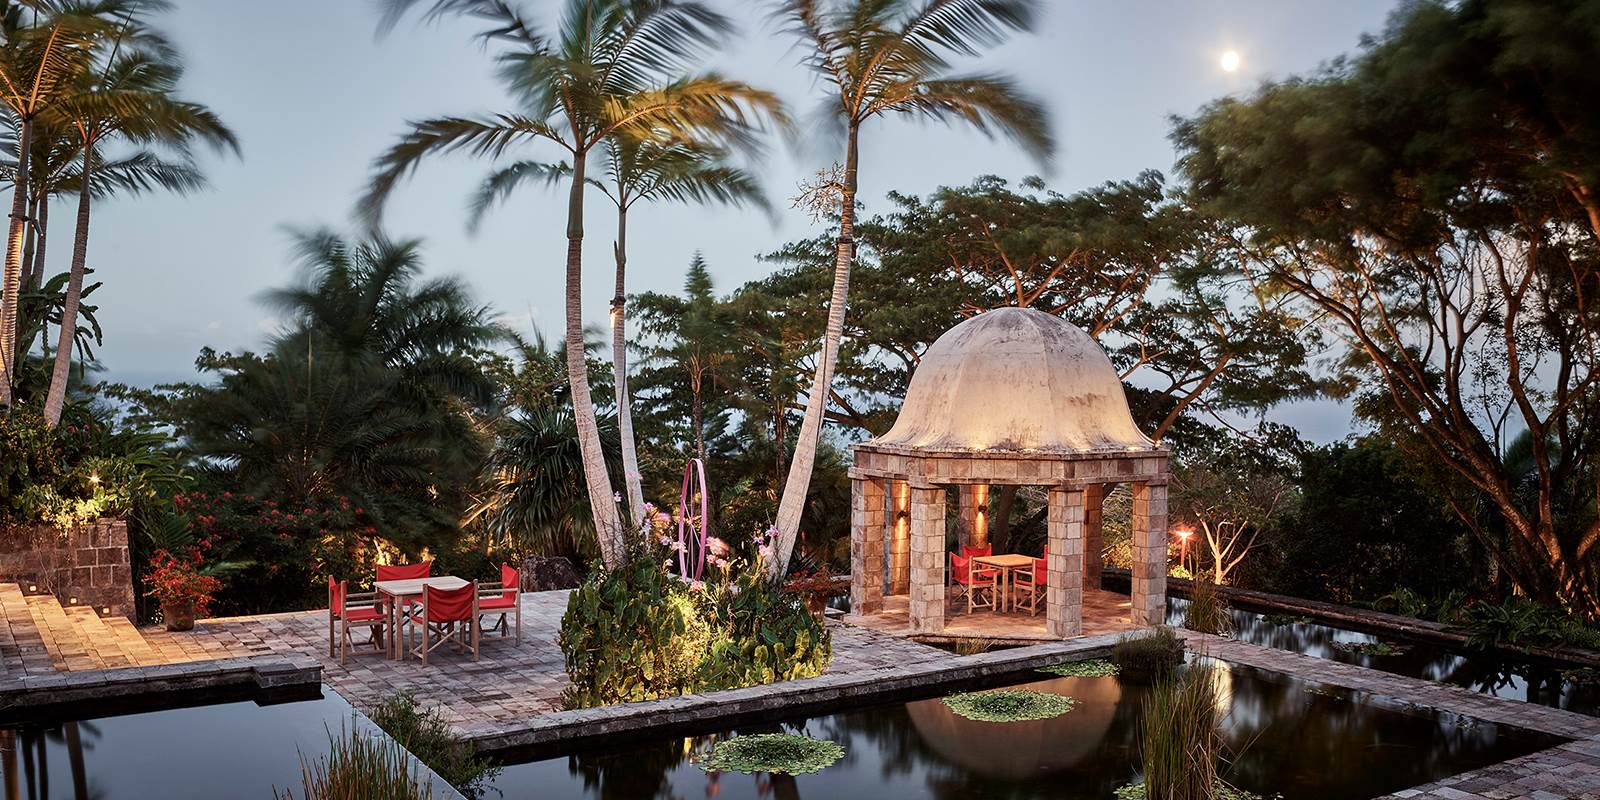 Hotels with pool in Nevis. GOLDEN ROCK INN